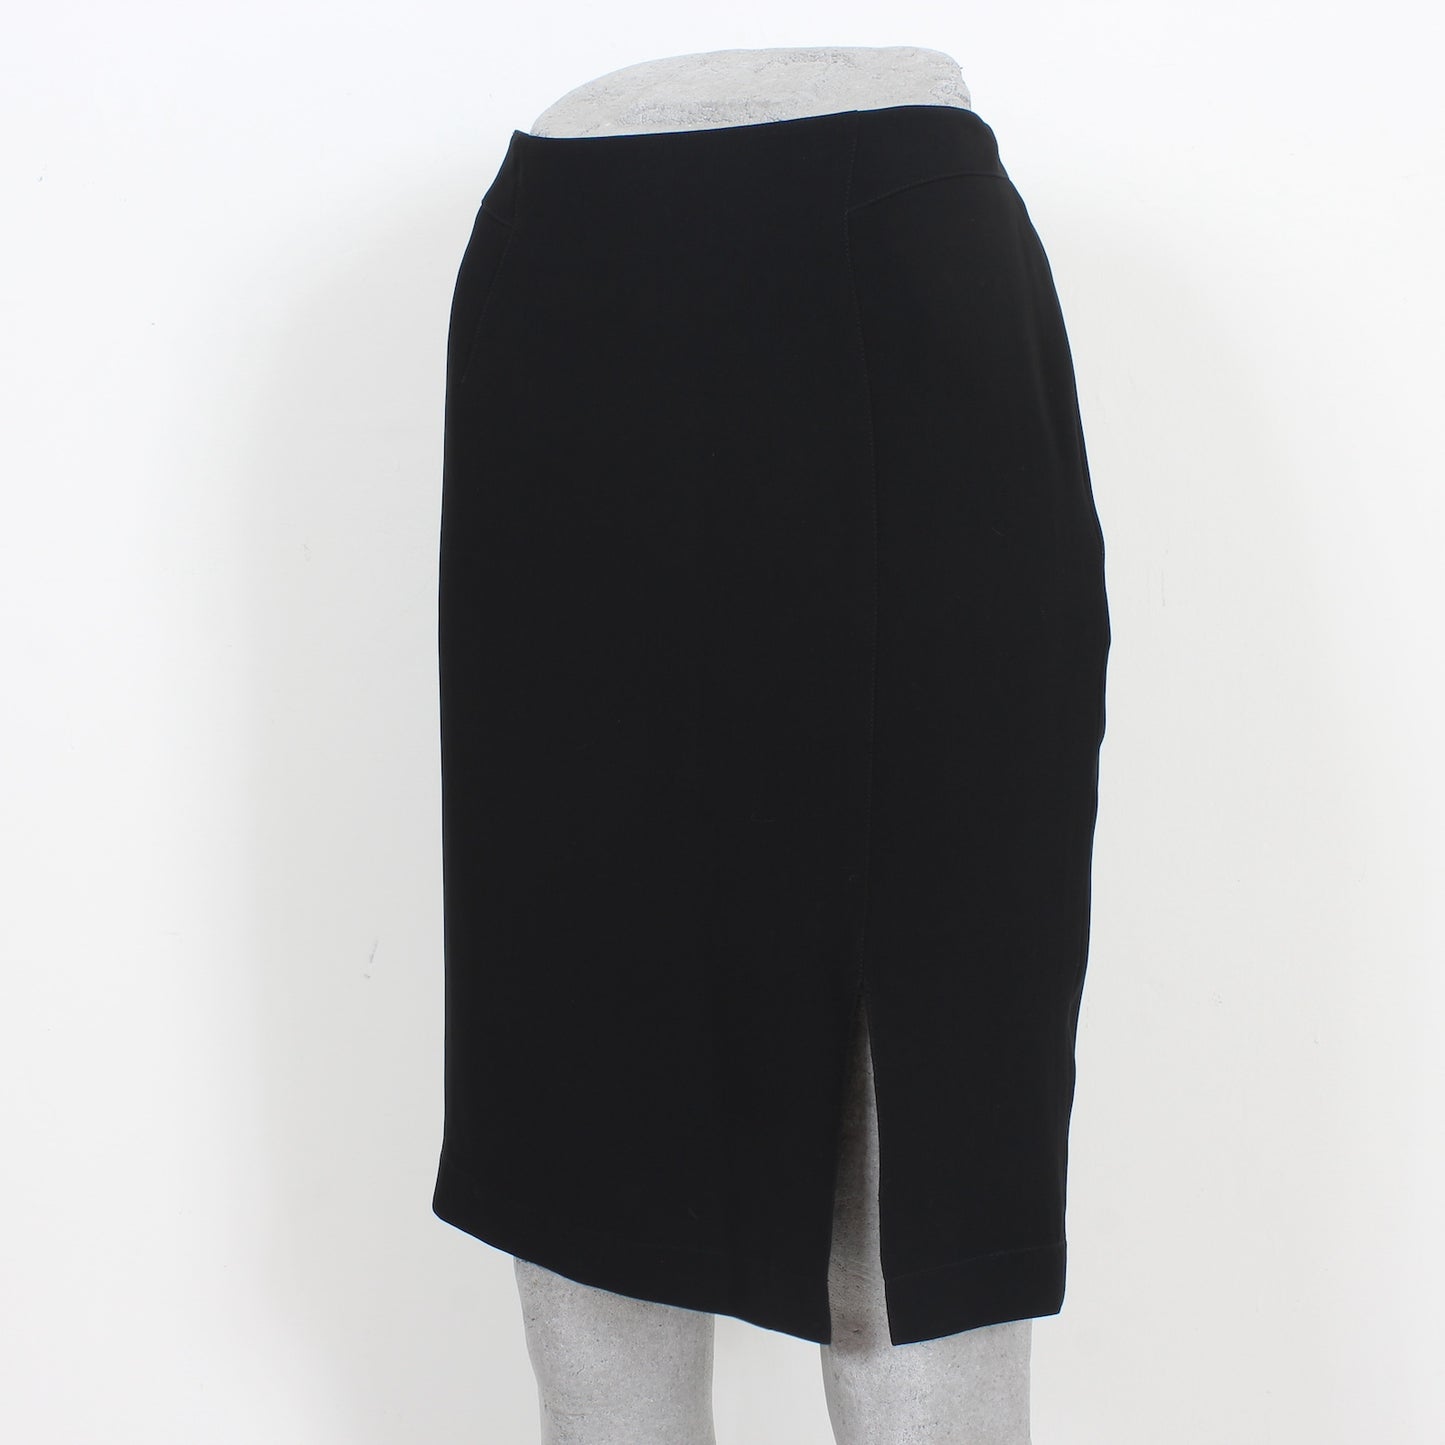 Thierry Mugler Black Pencil Skirt Vintage 1980s